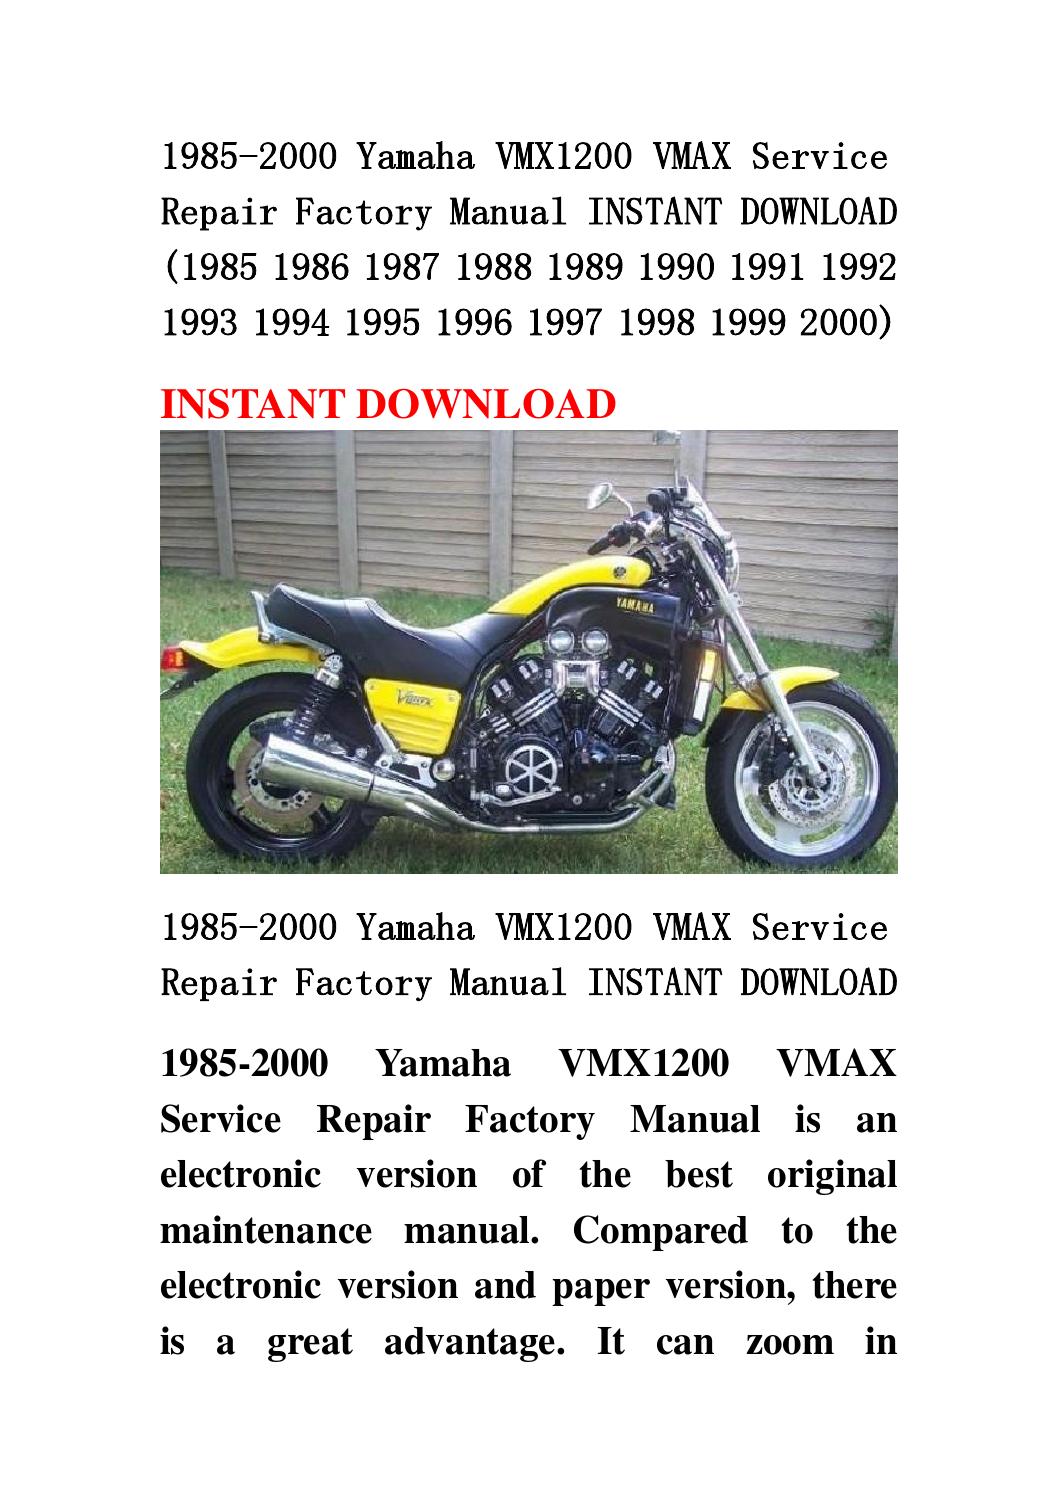 1986 f250 service manual download